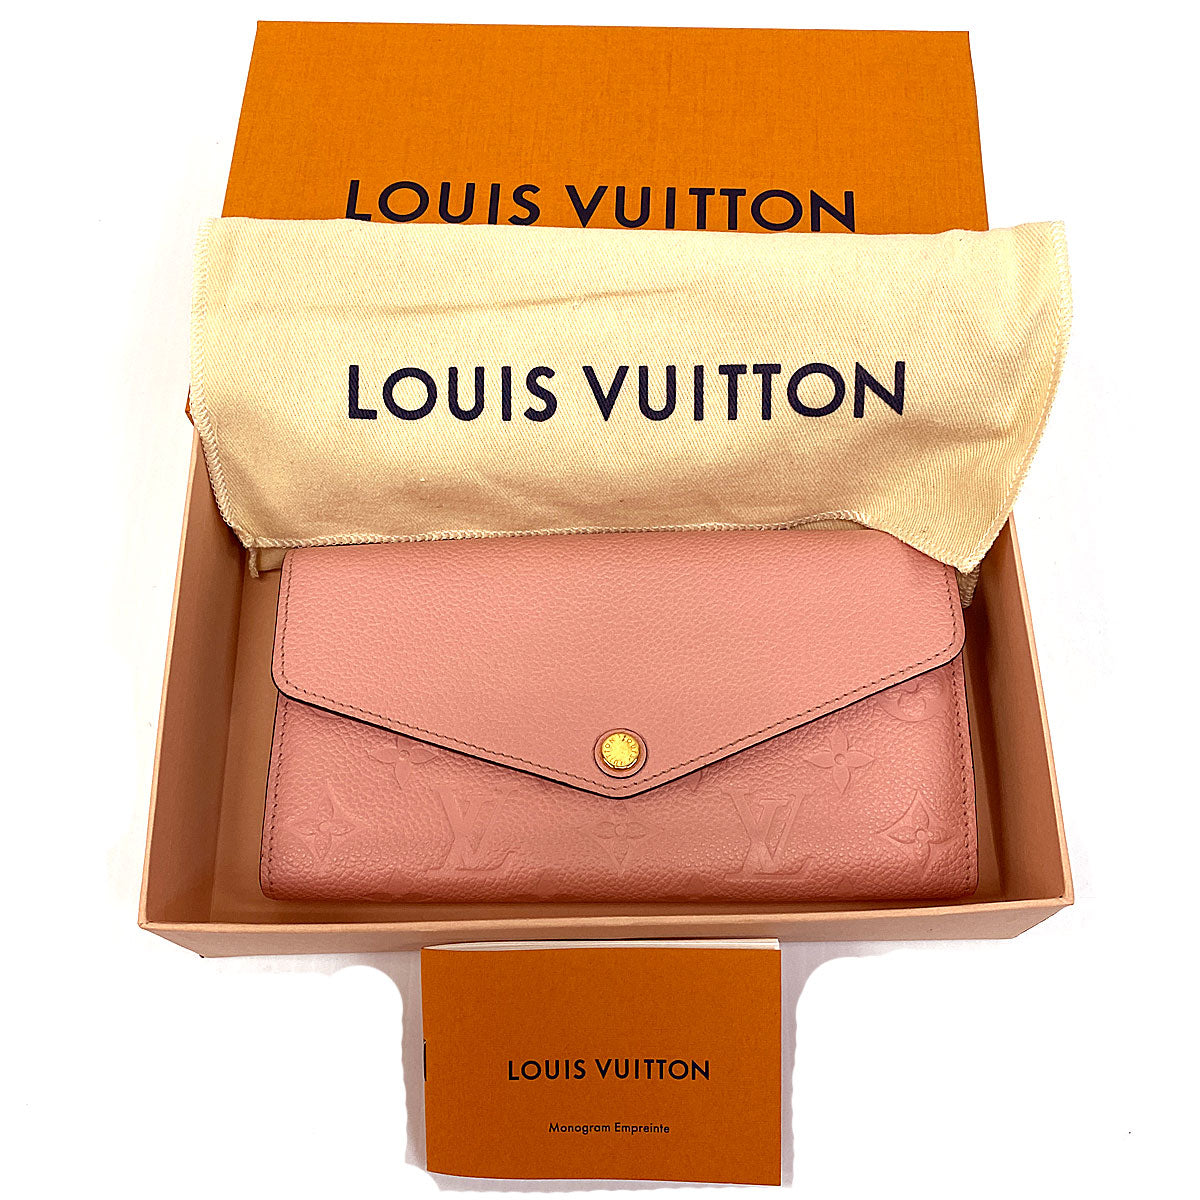 Buy Sarah Louis Vuitton Wallet Online In India -  India